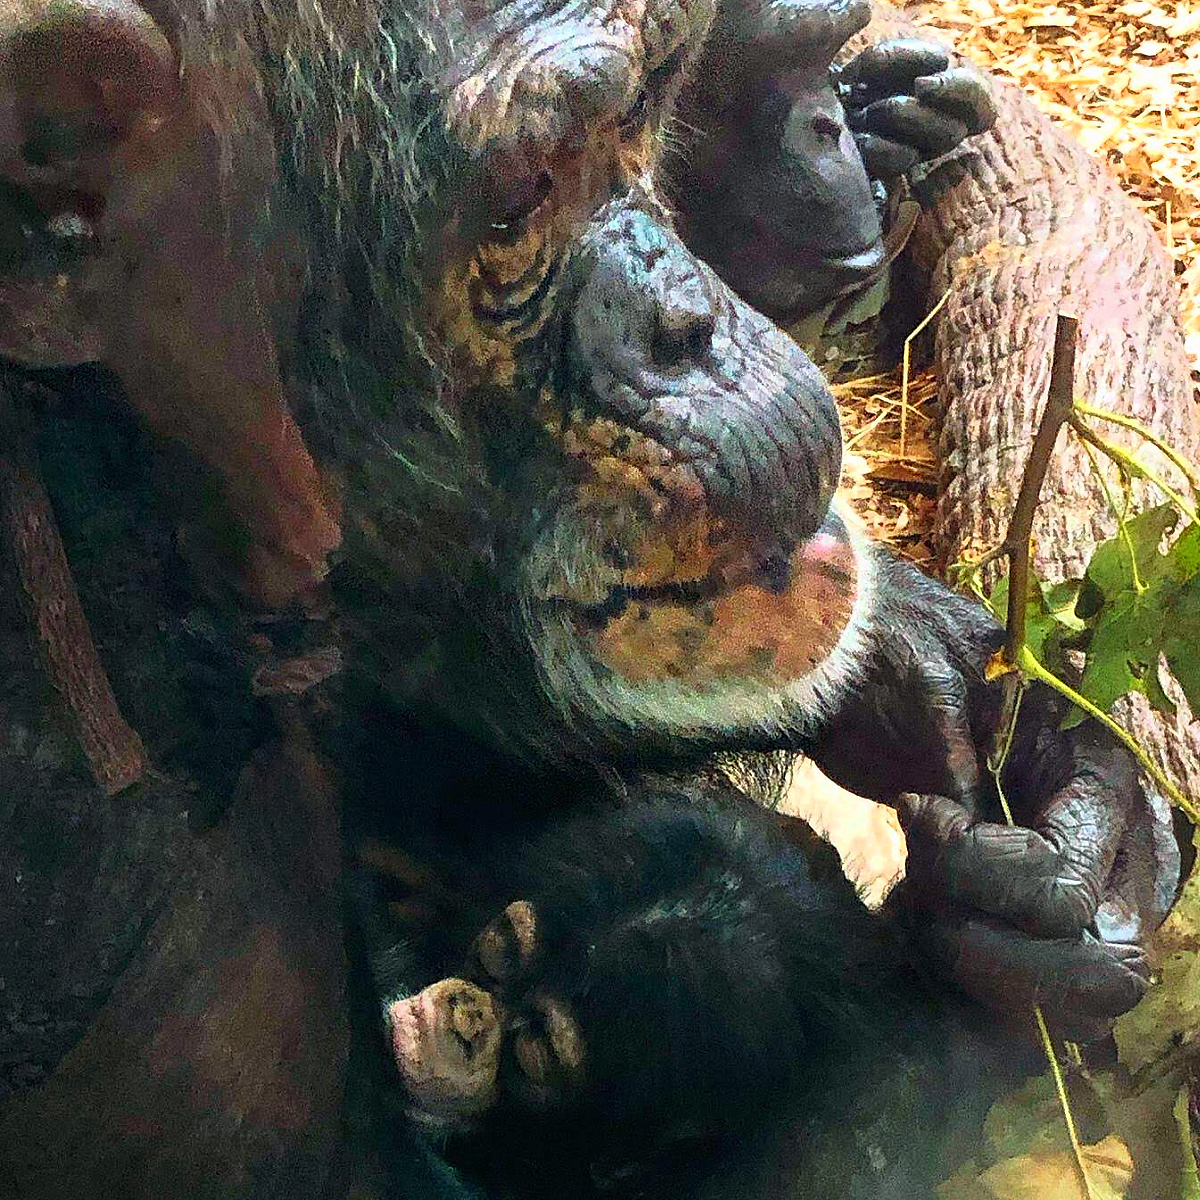 chimpanzee at maryland zoo